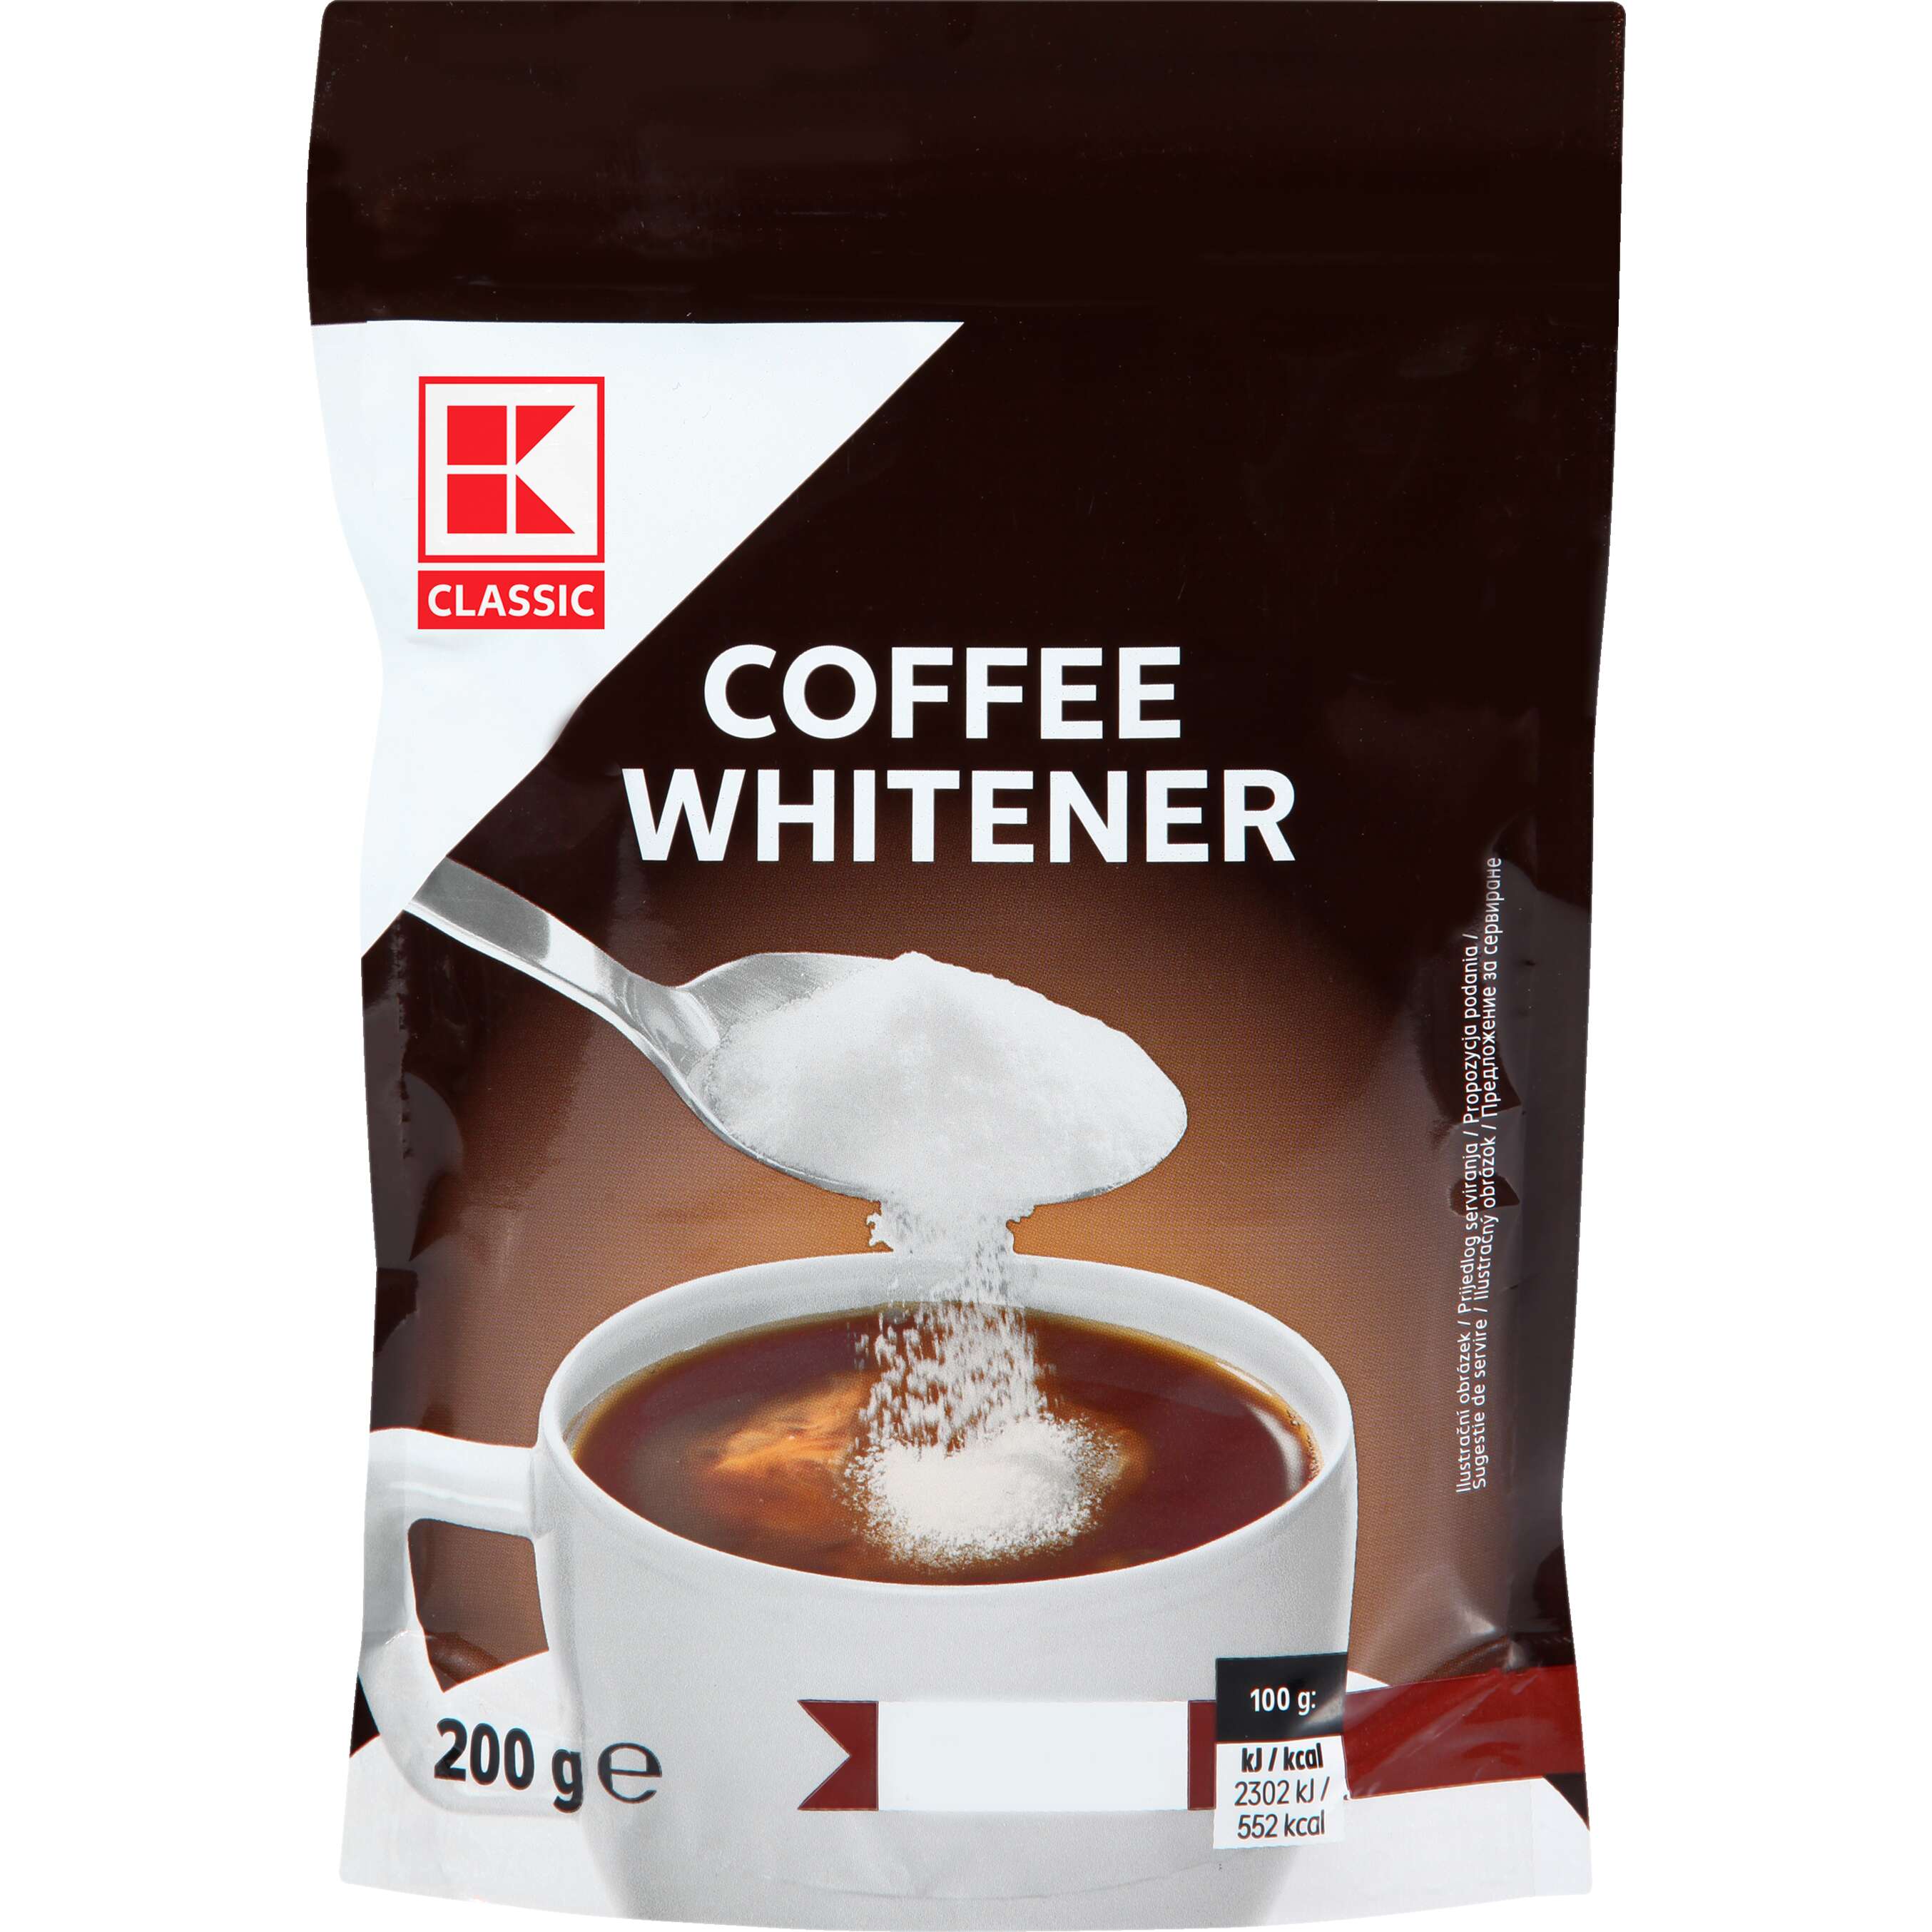 Zobrazit nabídku K-Classic Coffee Whitener